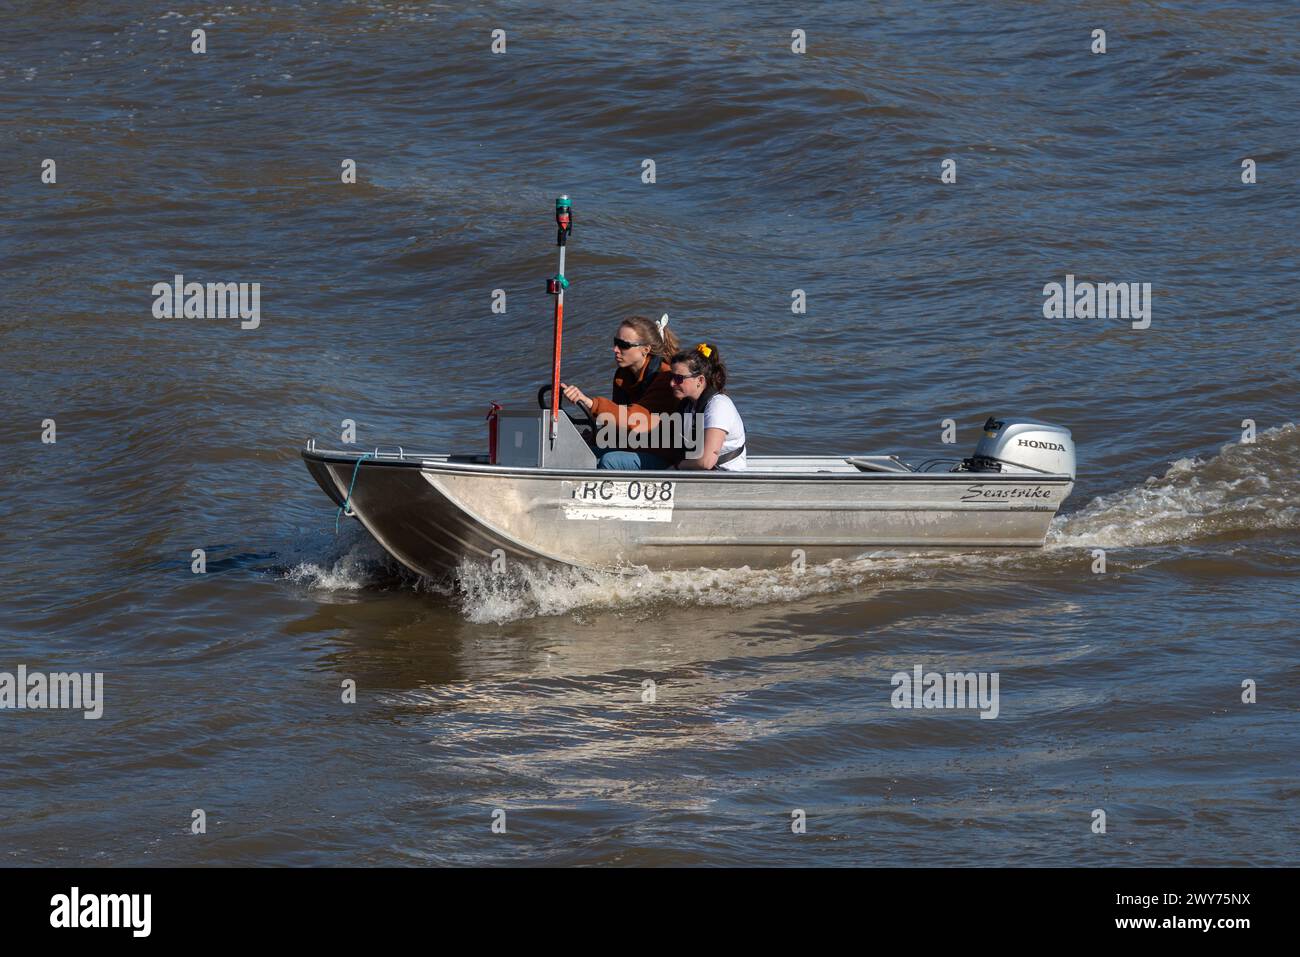 Small Seastrike Aluminium Boats chase boat at the University Boat Race at Mortlake, London, UK Stock Photo